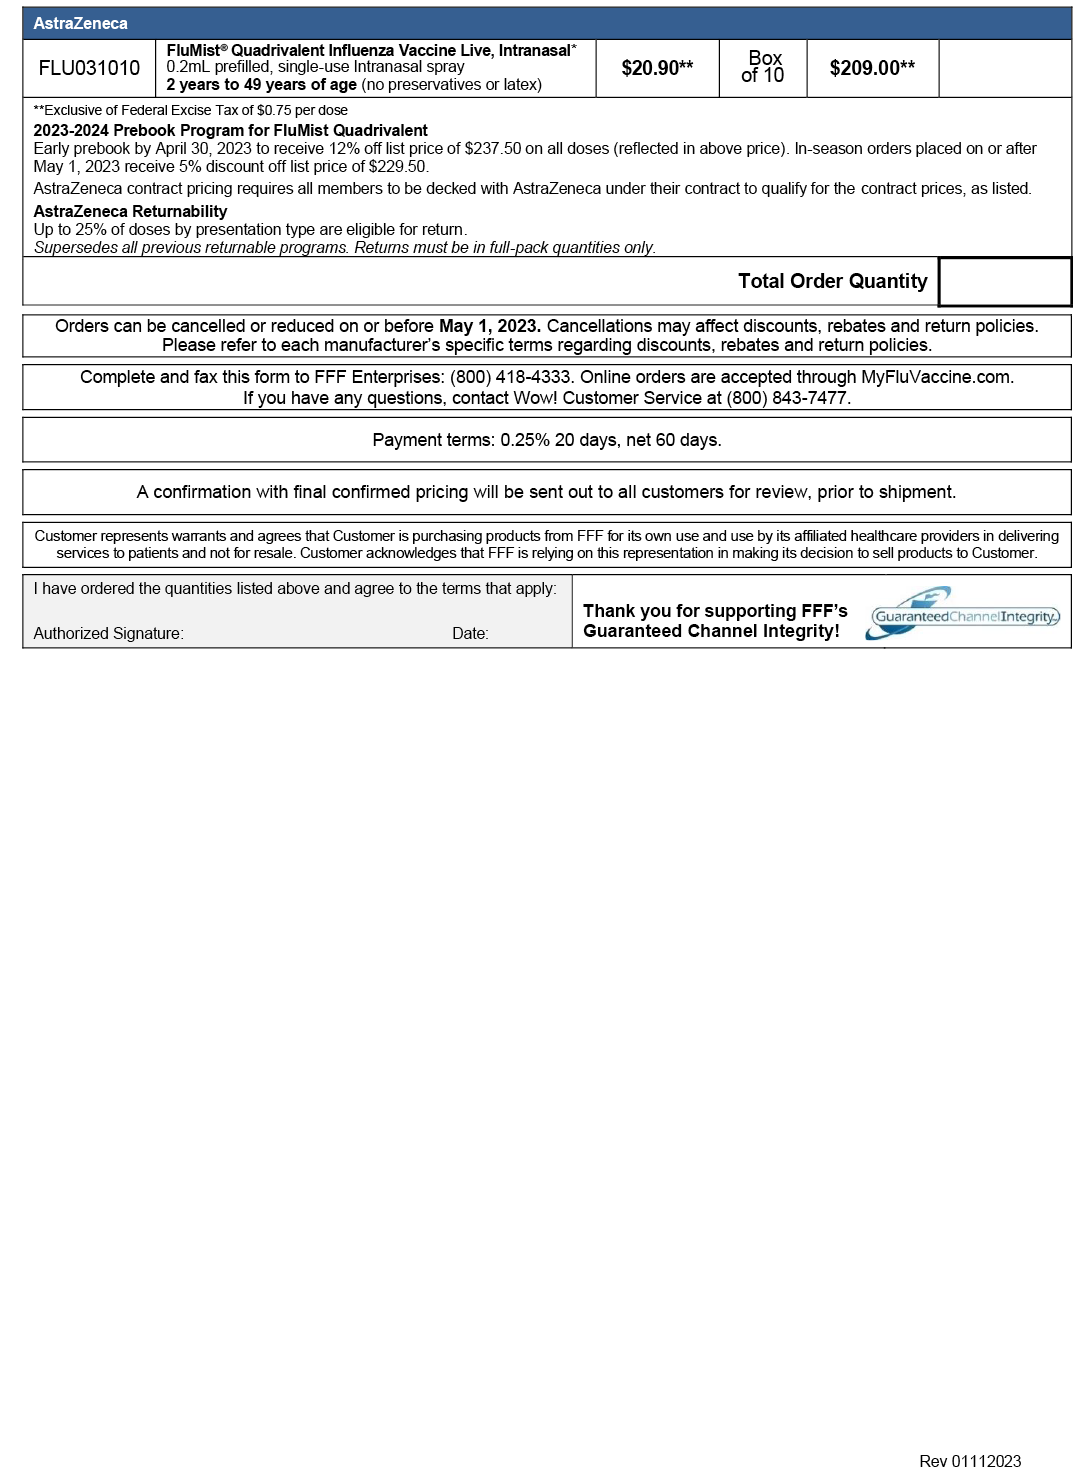 FFF Enterprises flu vaccine order form page 2